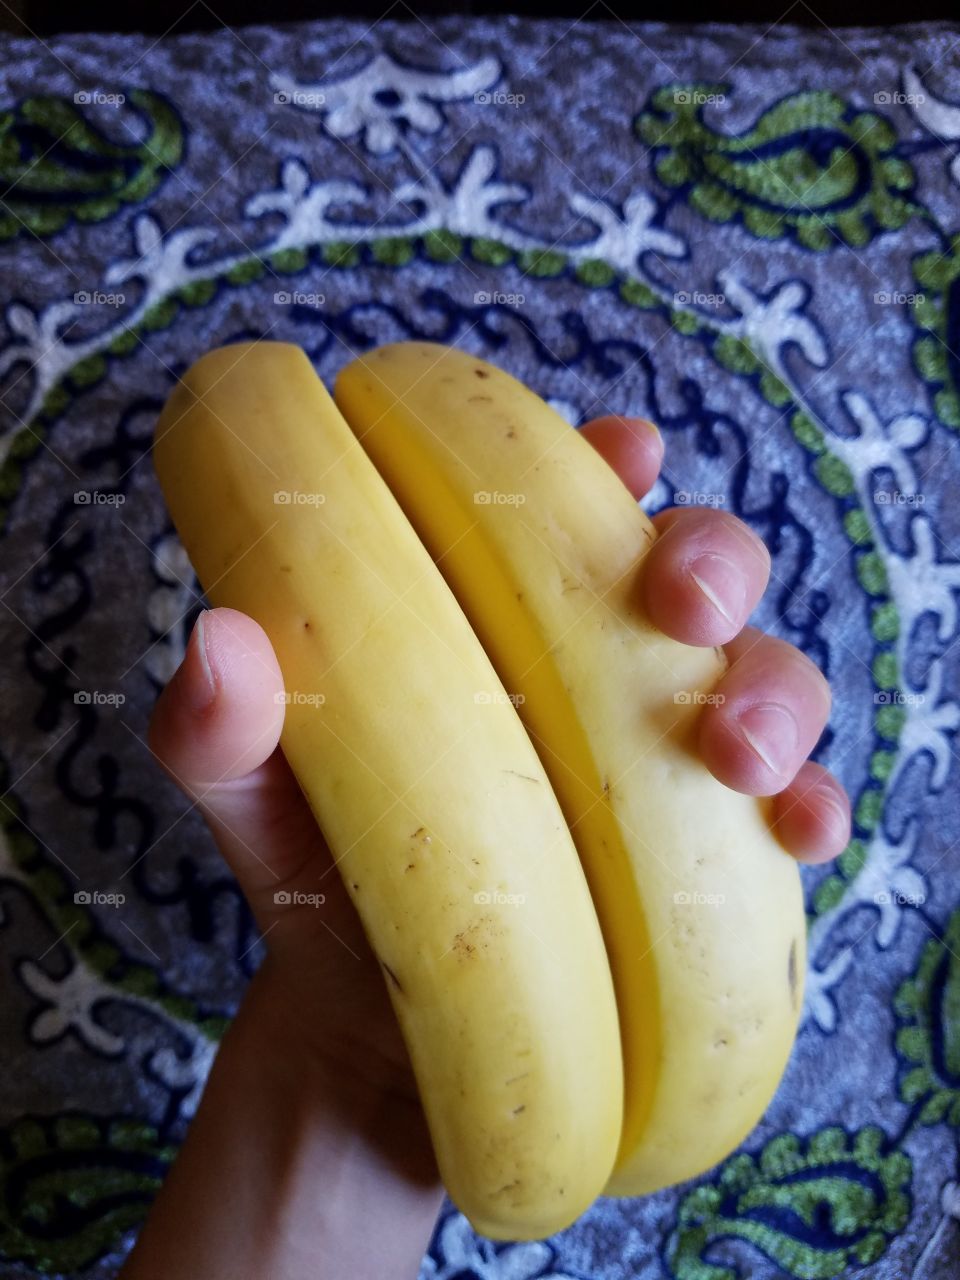 Holding bananas